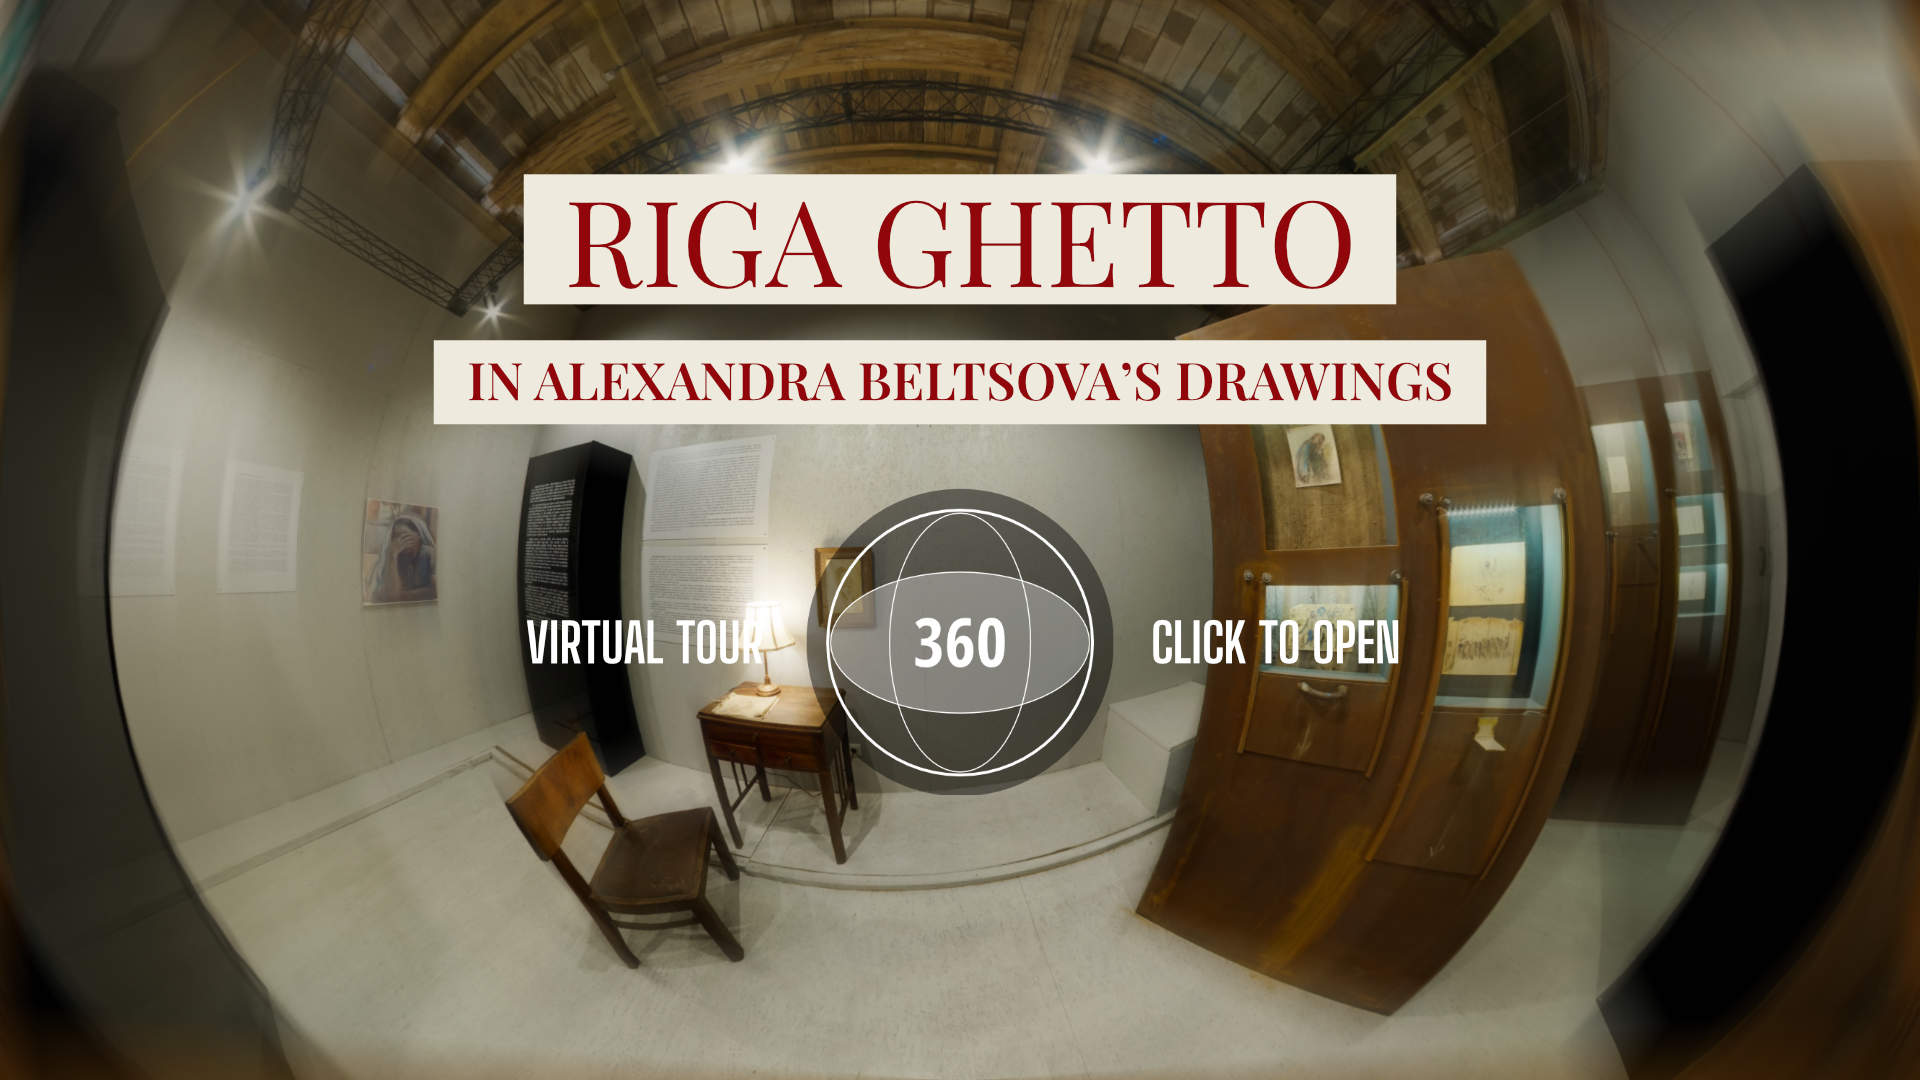 Riga Ghetto in Alexandra Beltsova’s drawings